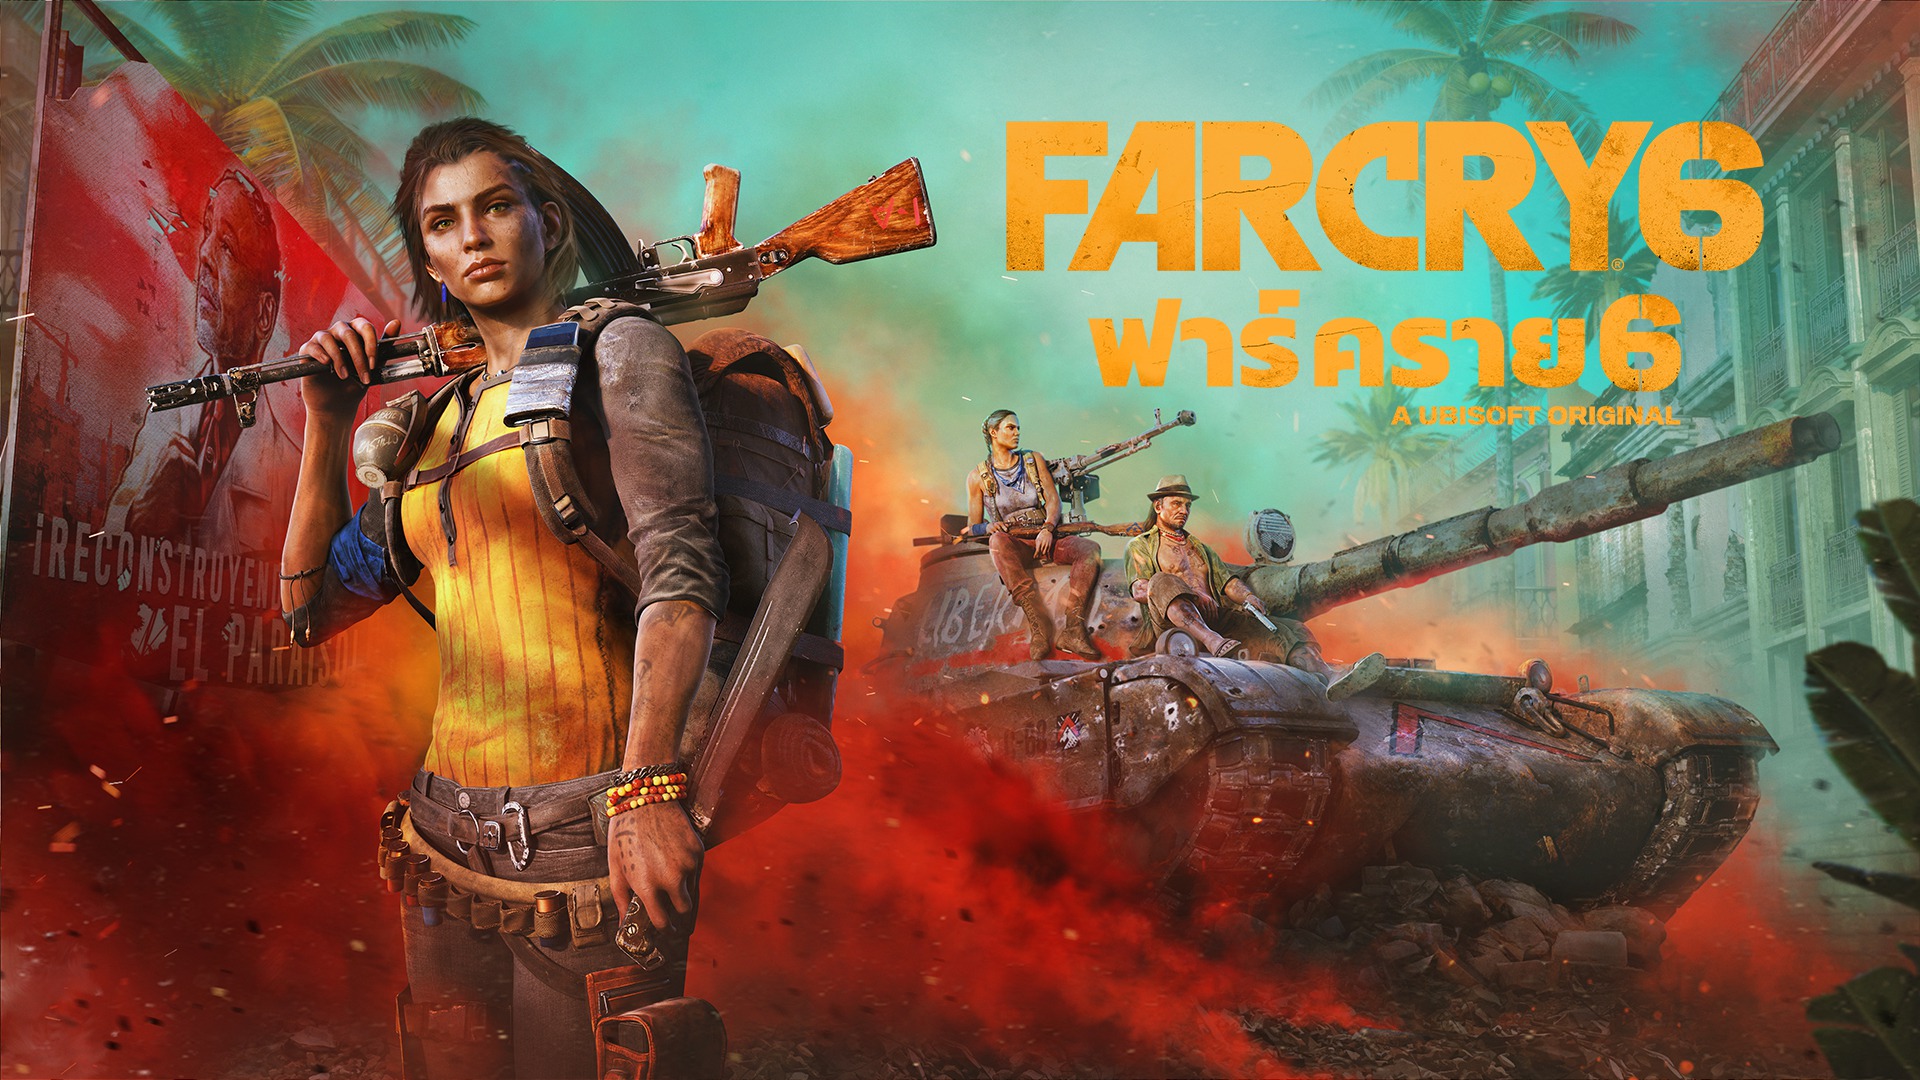  Far Cry 6 เตรียมเปิดให้เล่นฟรีในระหว่างวันที่ 24 - 27 มีนาคมนี้ทั้งบน PC และคอนโซล